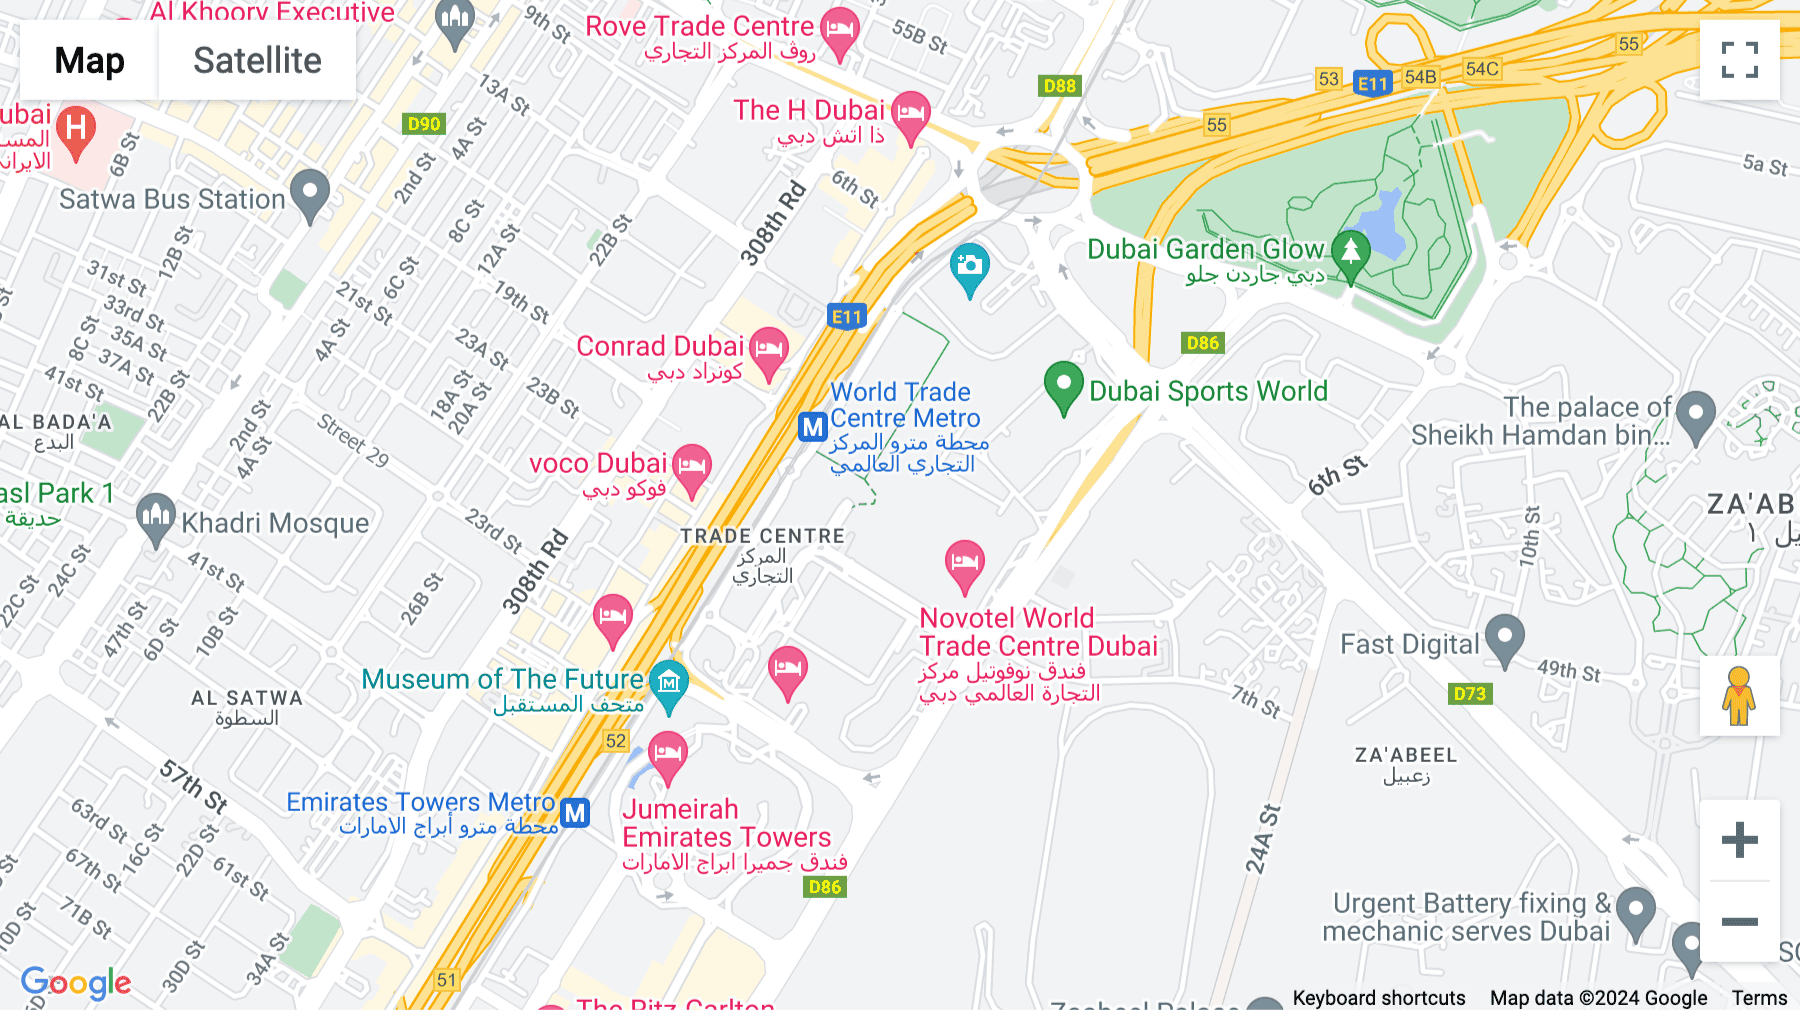 Click for interative map of Sheikh Zayed Road, Dubai World Trade Centre, Dubai